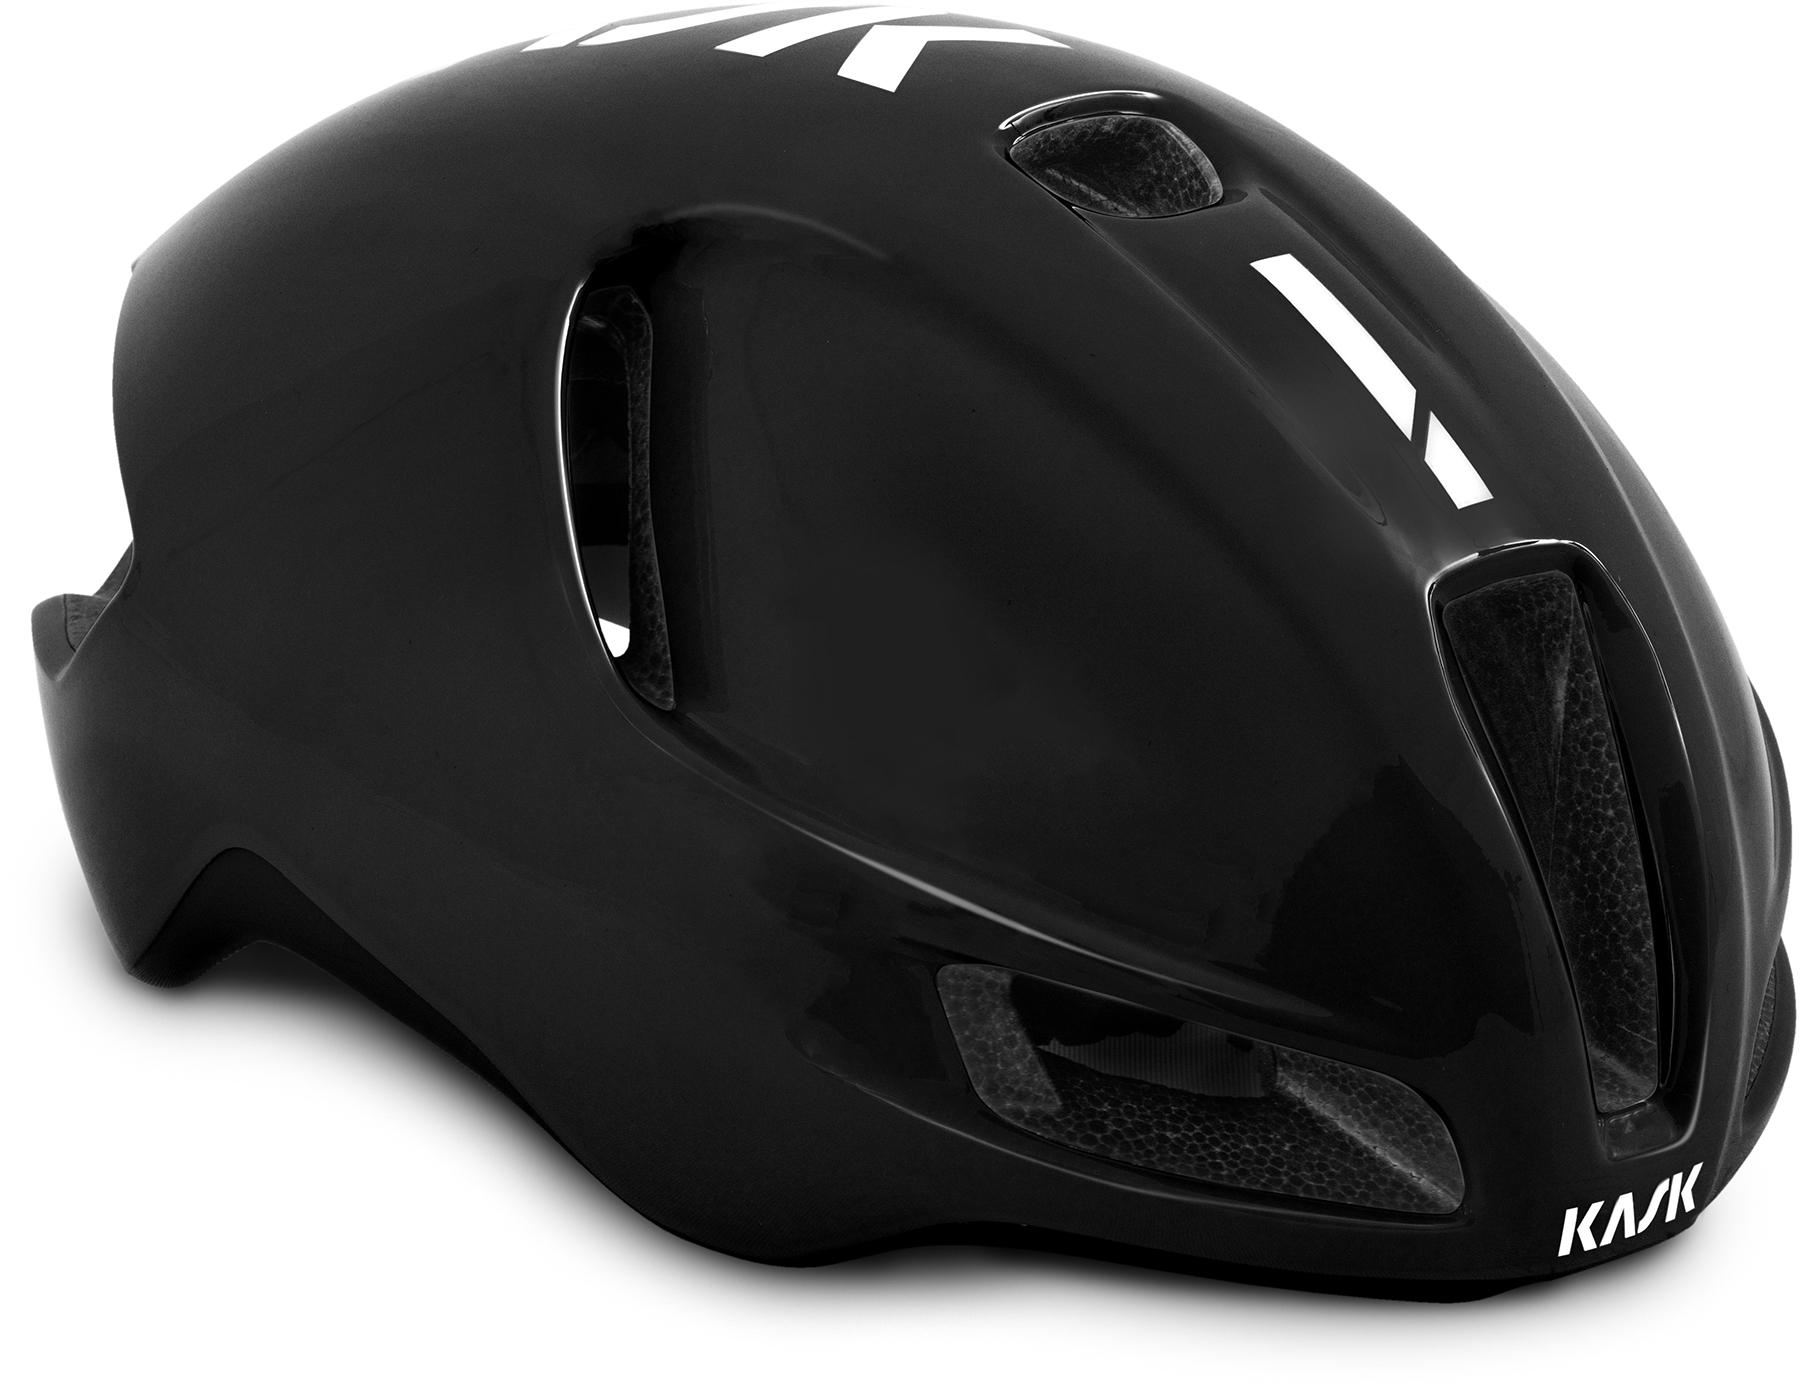 Kask Utopia Road Cycling Helmet (wg11) - Black/white